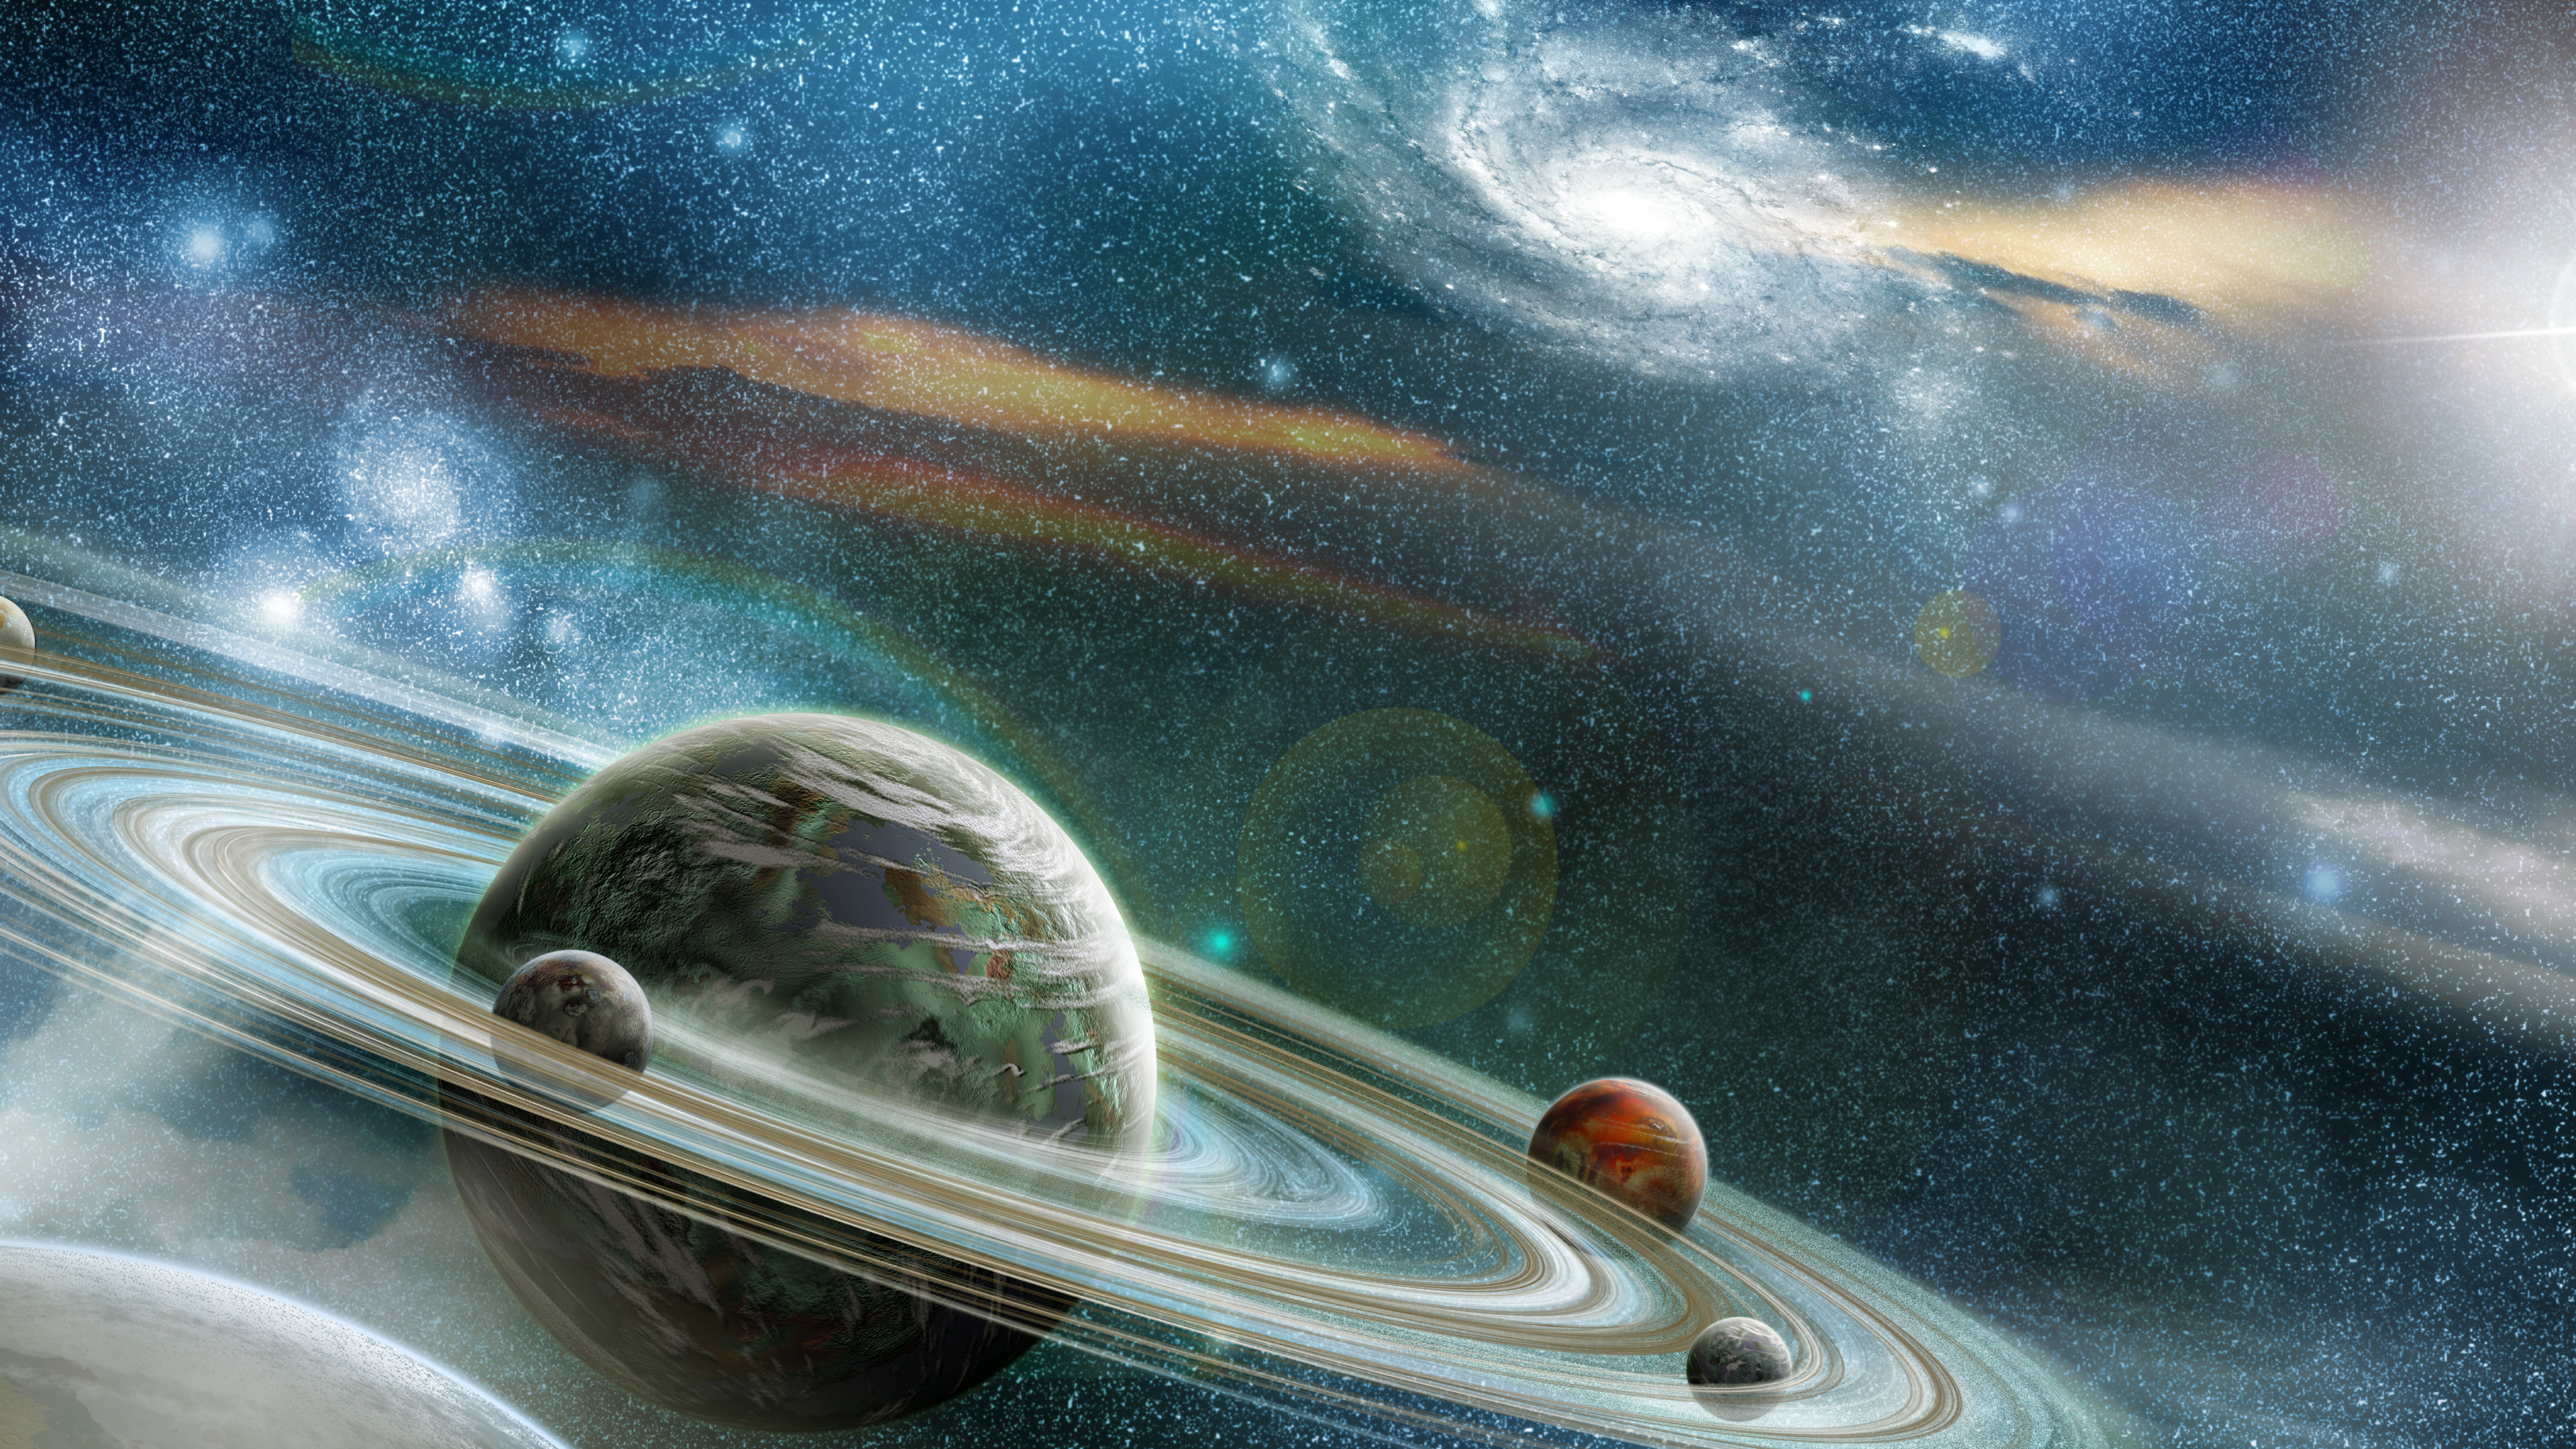 Saturn Wallpapers - Top 30 Best Saturn Wallpapers [ HQ ]